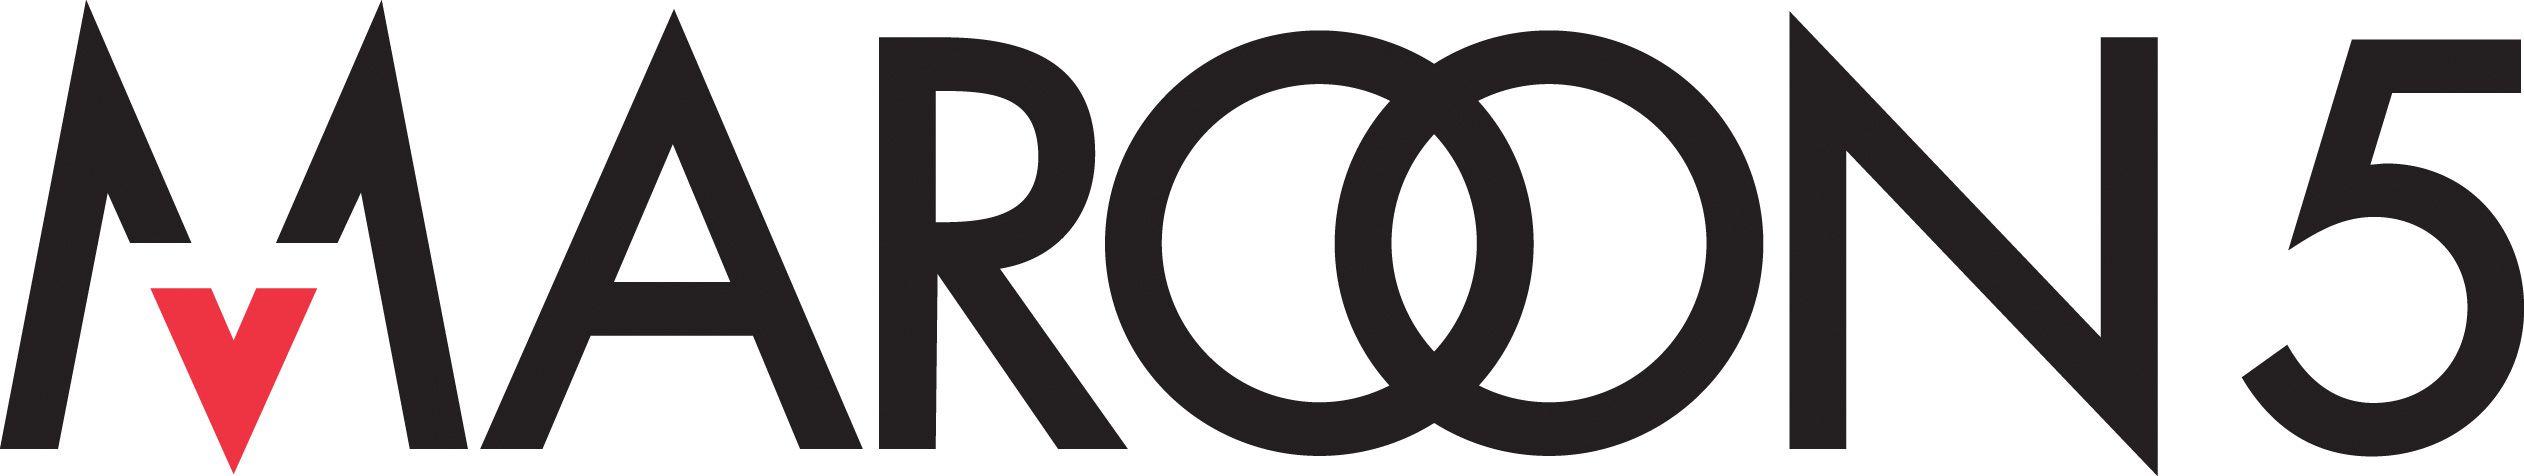 New Maroon 5 Logo - Maroon 5 Logos